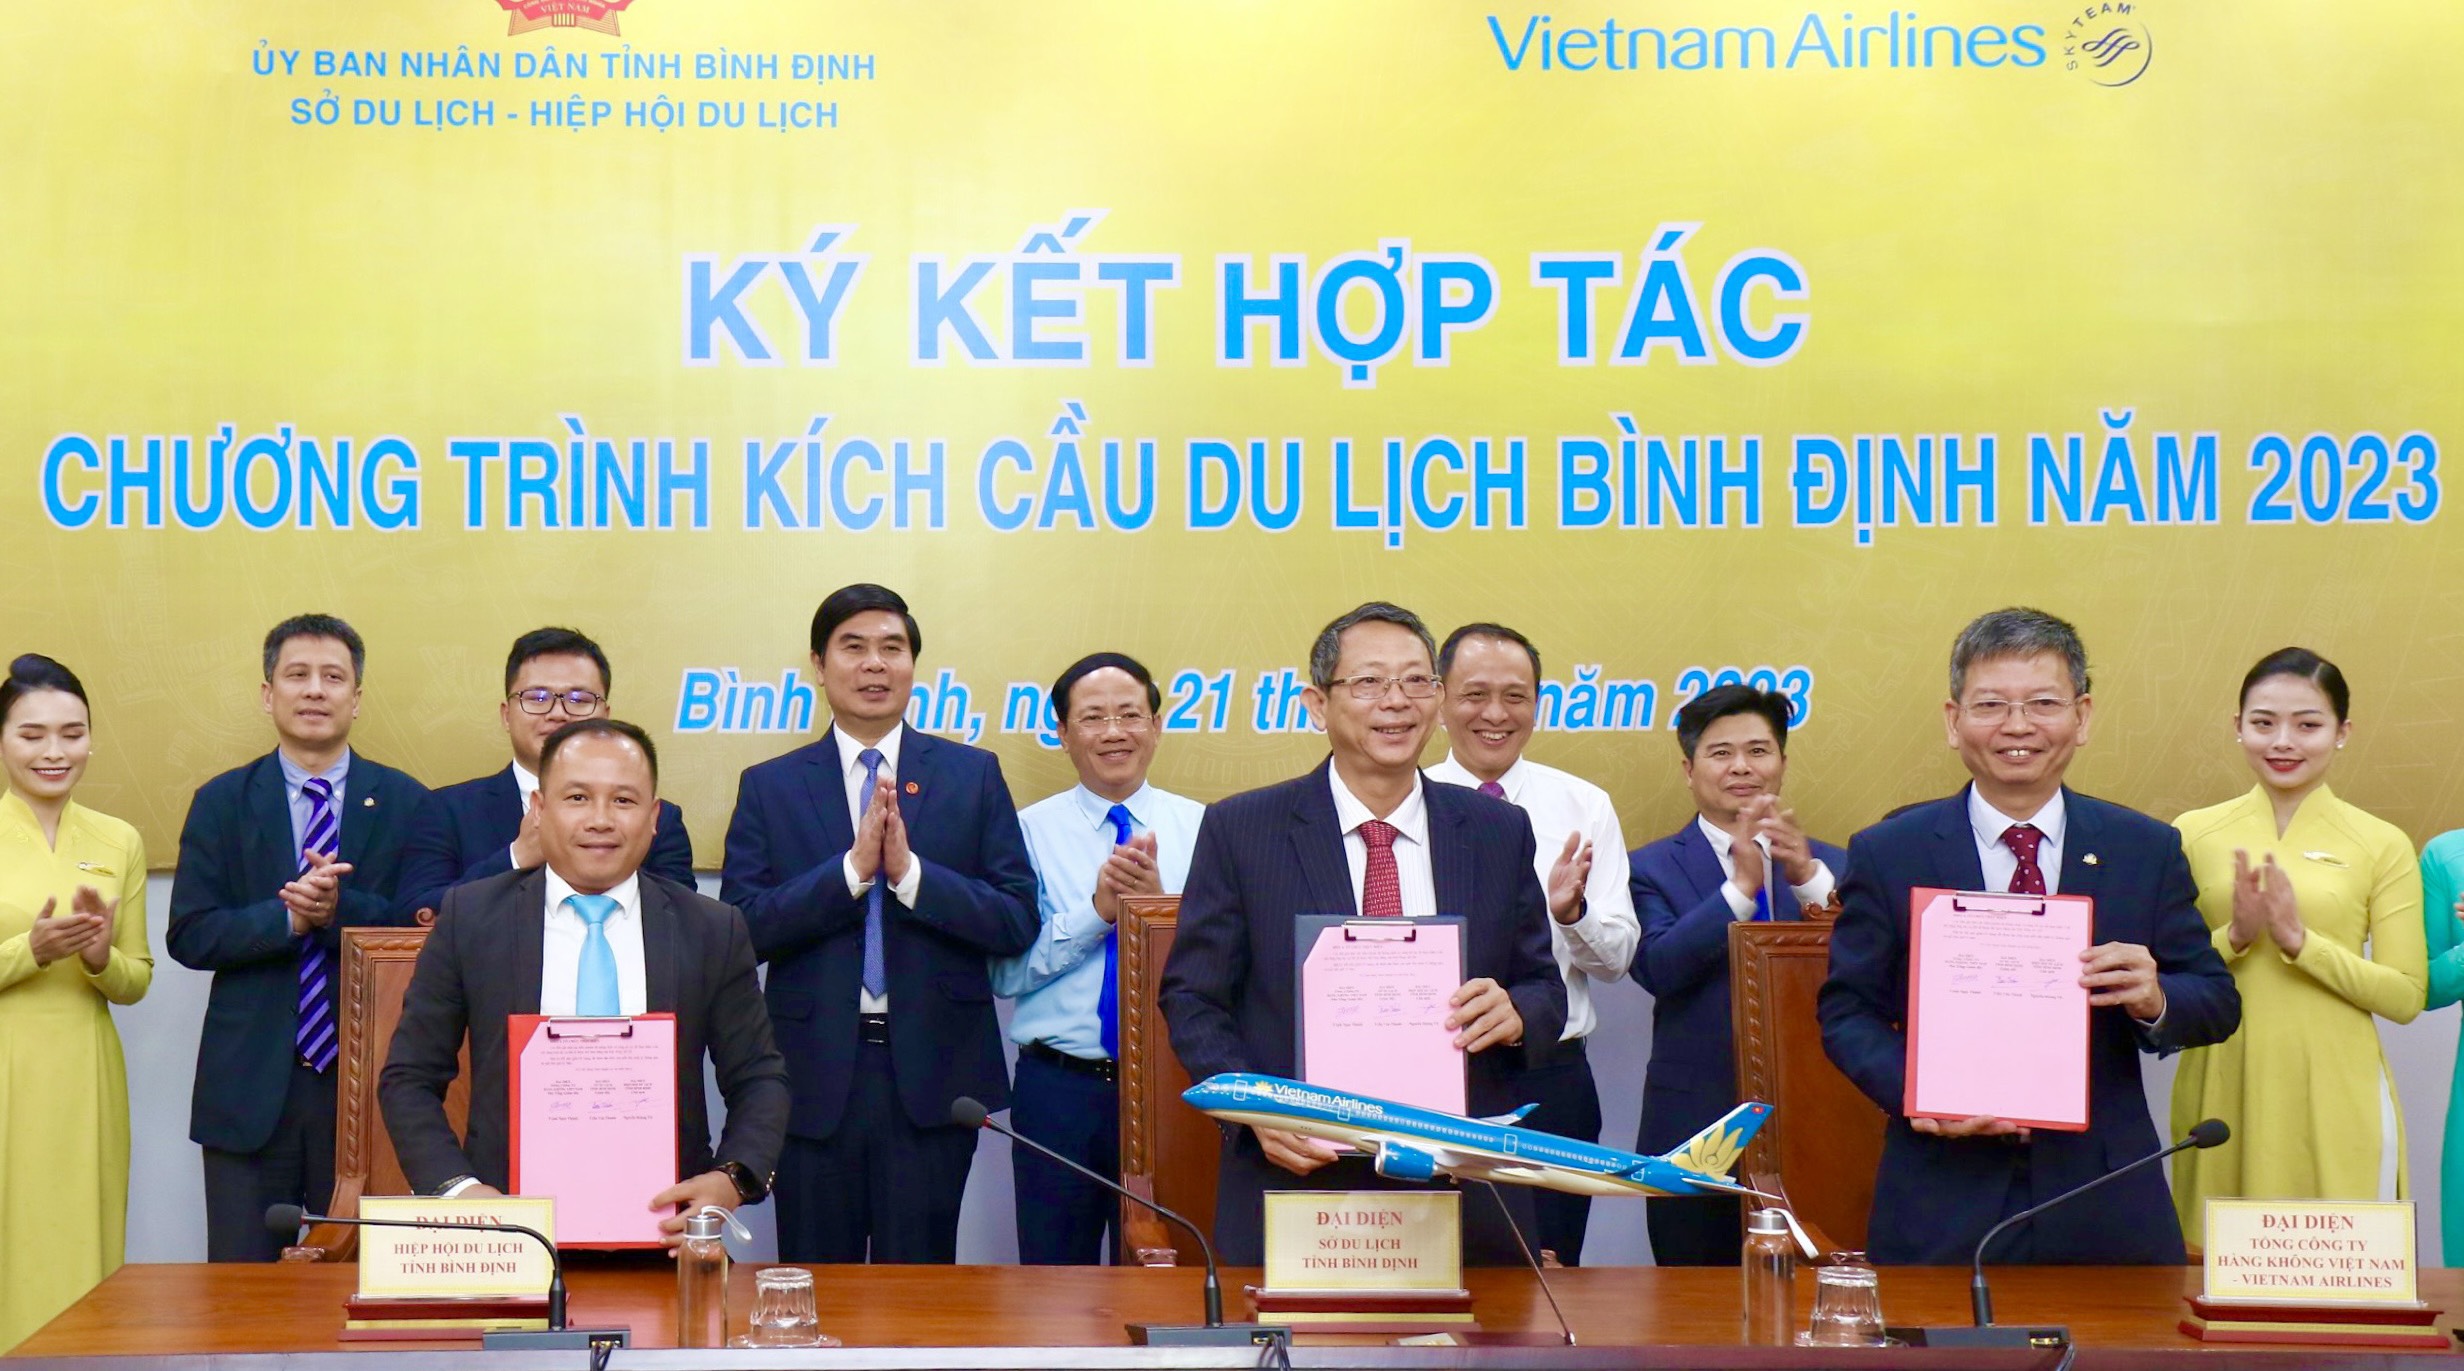 Binh Dinh성 인민위원회는 Vietnam Airlines Corporation (Vietnam Airlines)과 협력합니다.